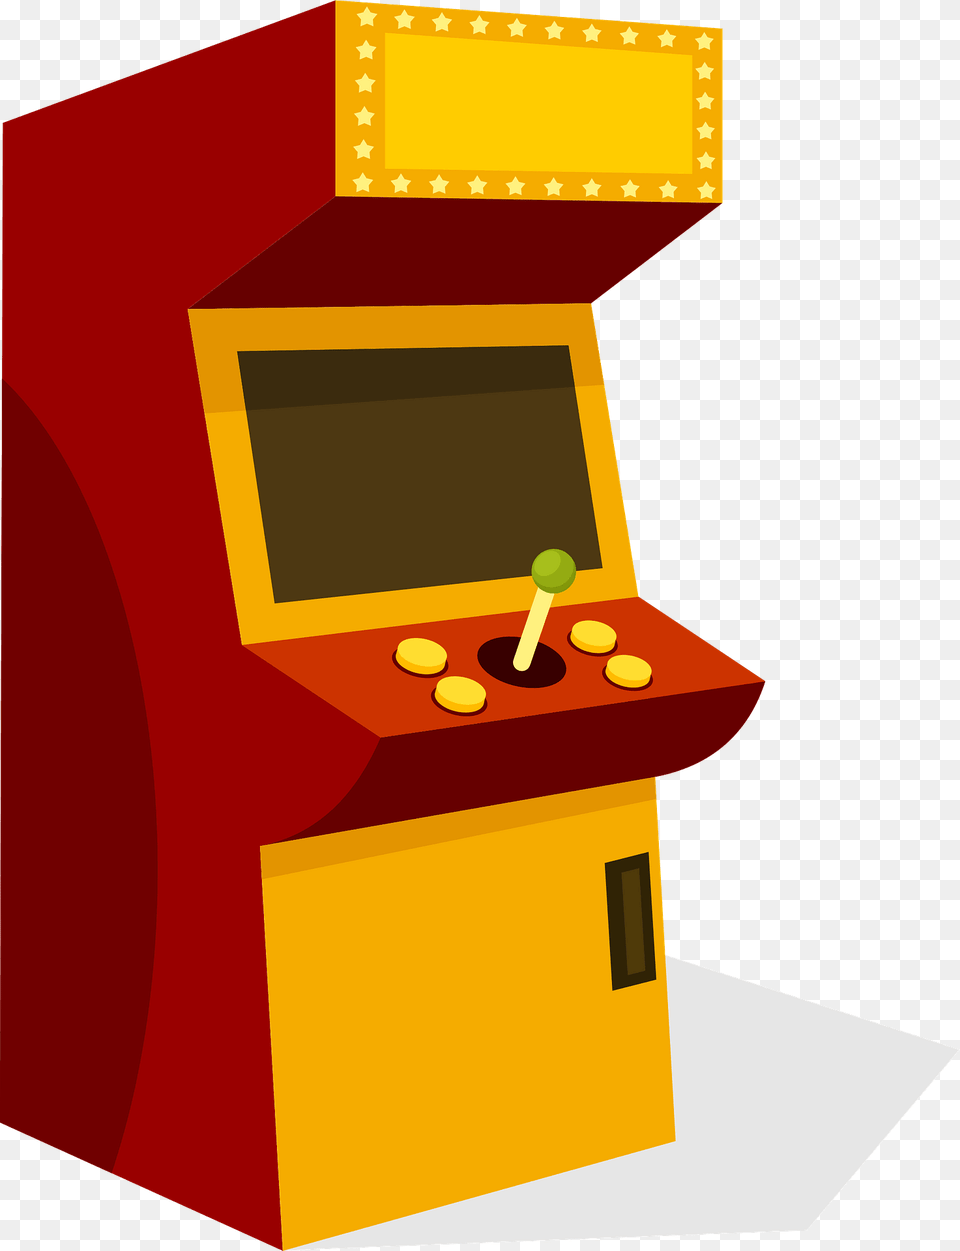 Arcade Machine Clipart, Arcade Game Machine, Game Free Png Download